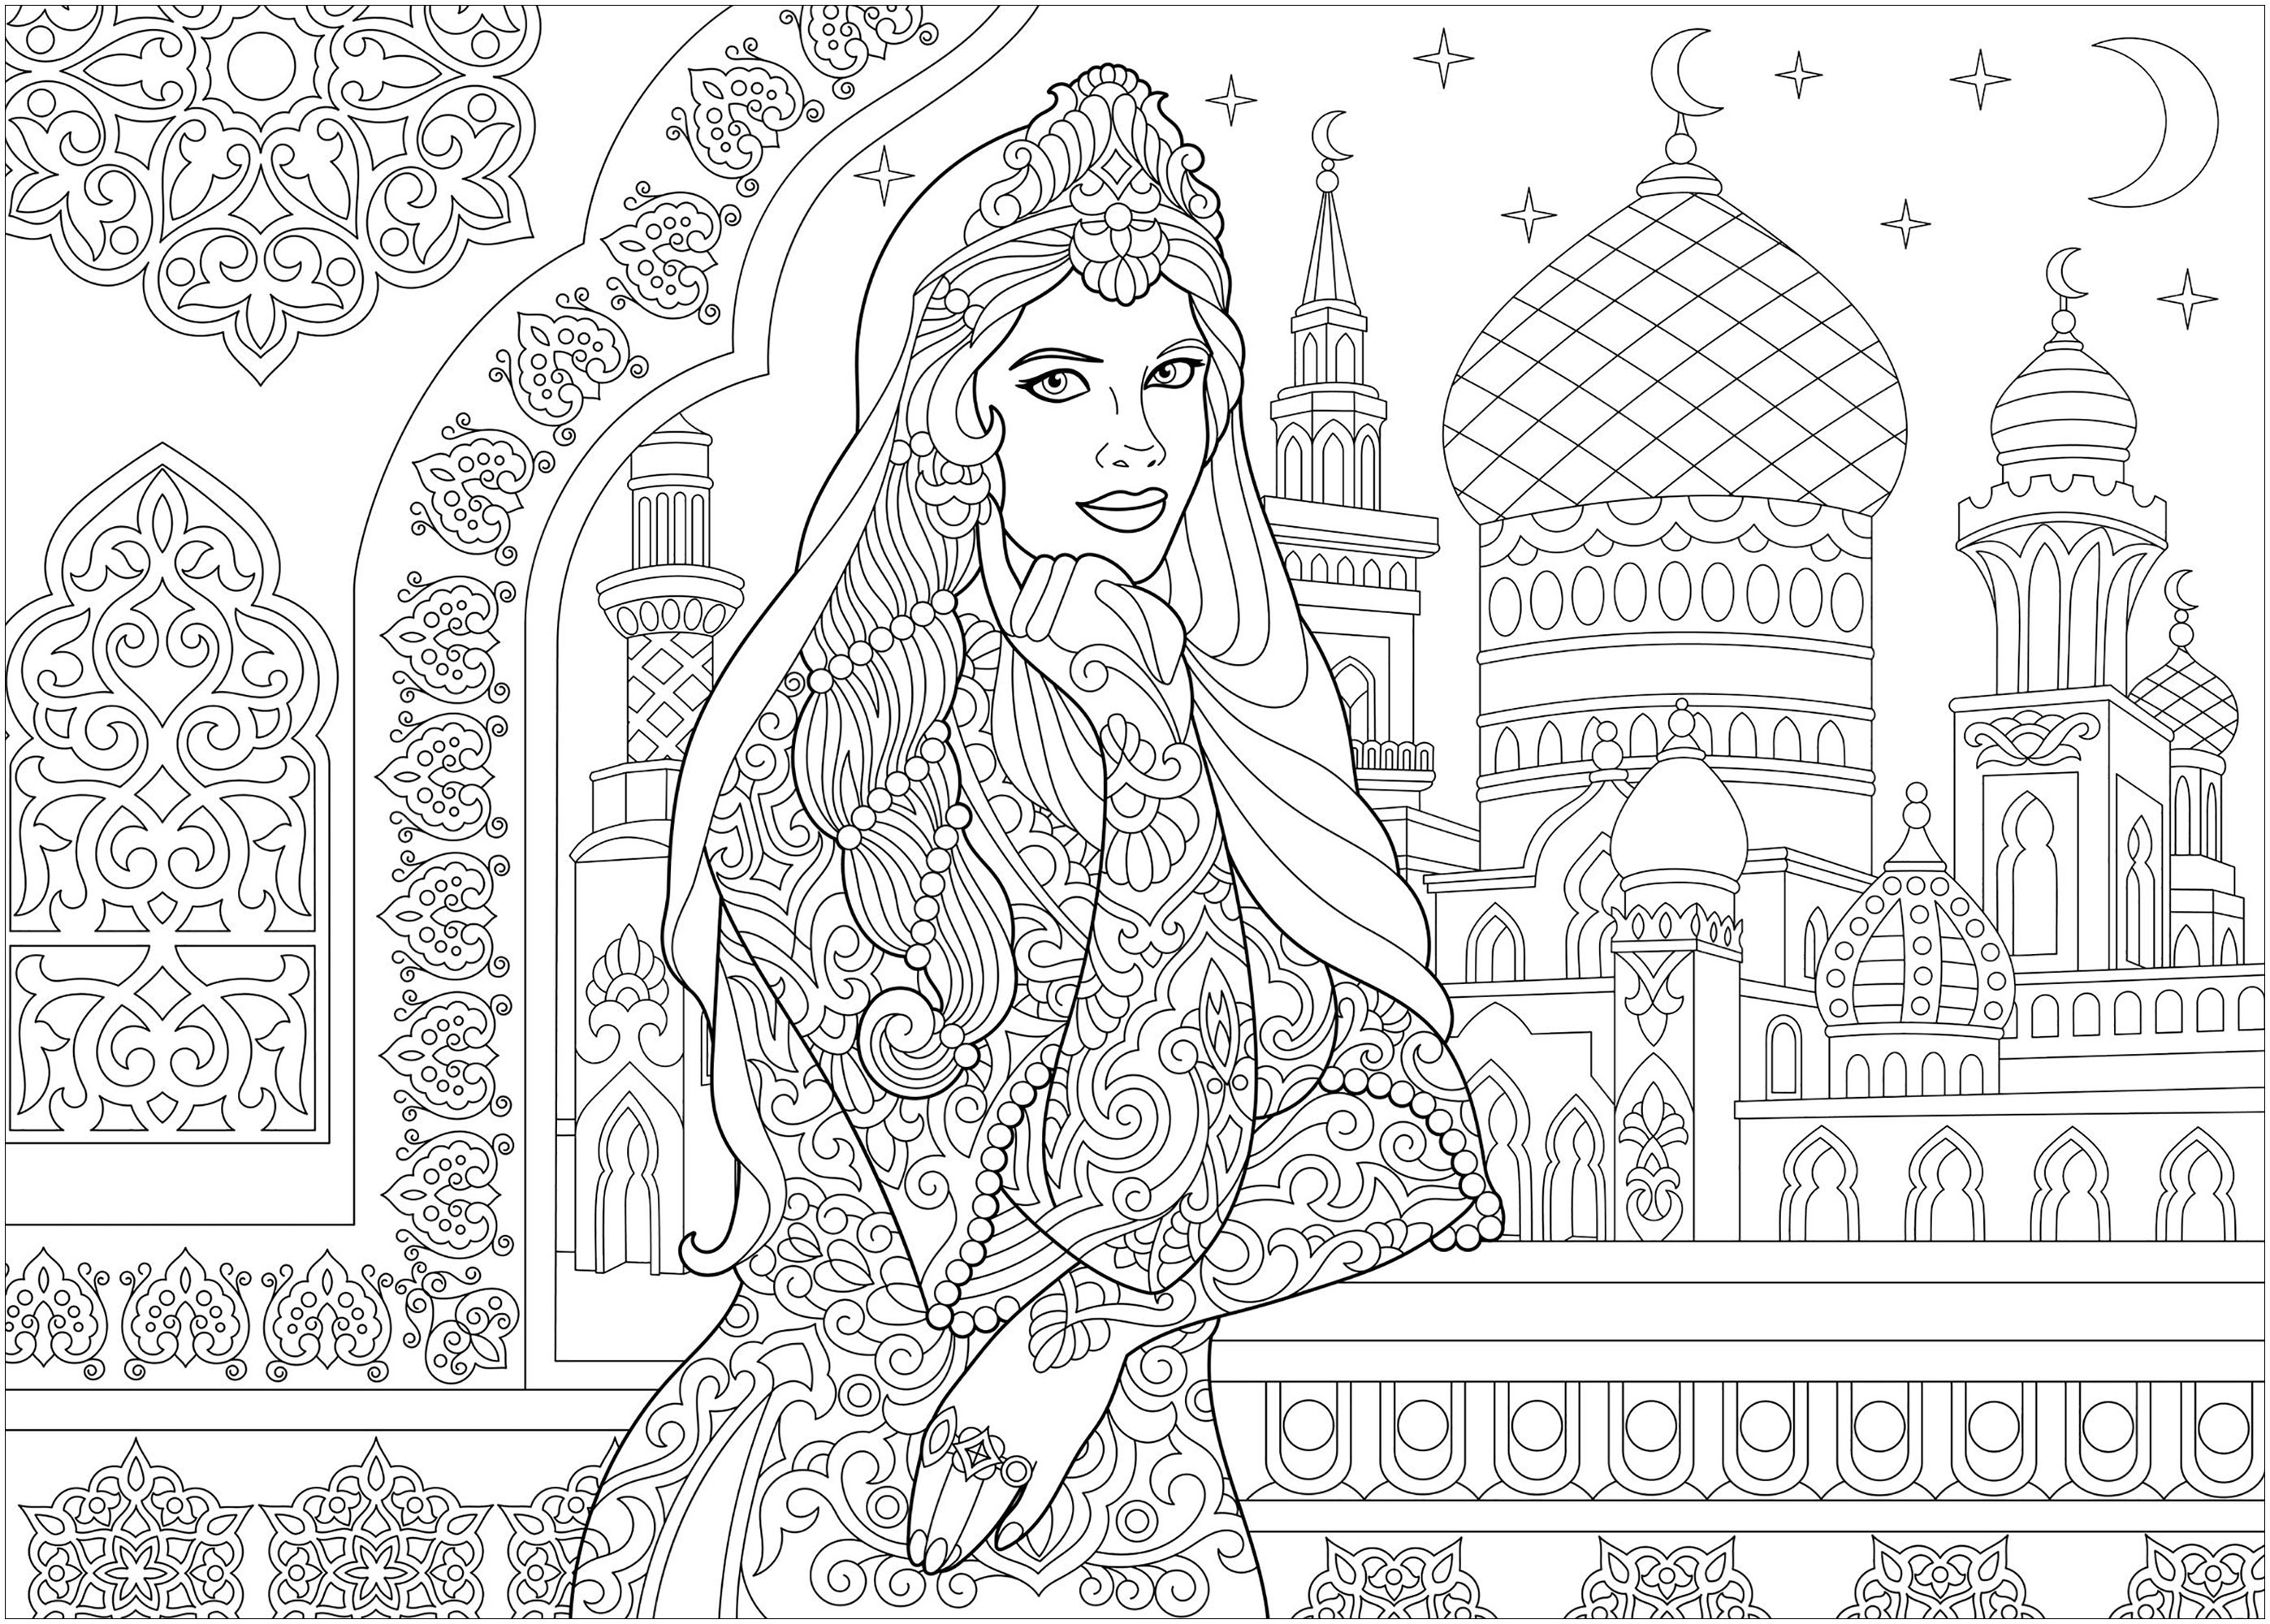 Desenhos grátis para colorir de Oriental para imprimir e colorir, Artista : Sybirko   Fonte : 123rf